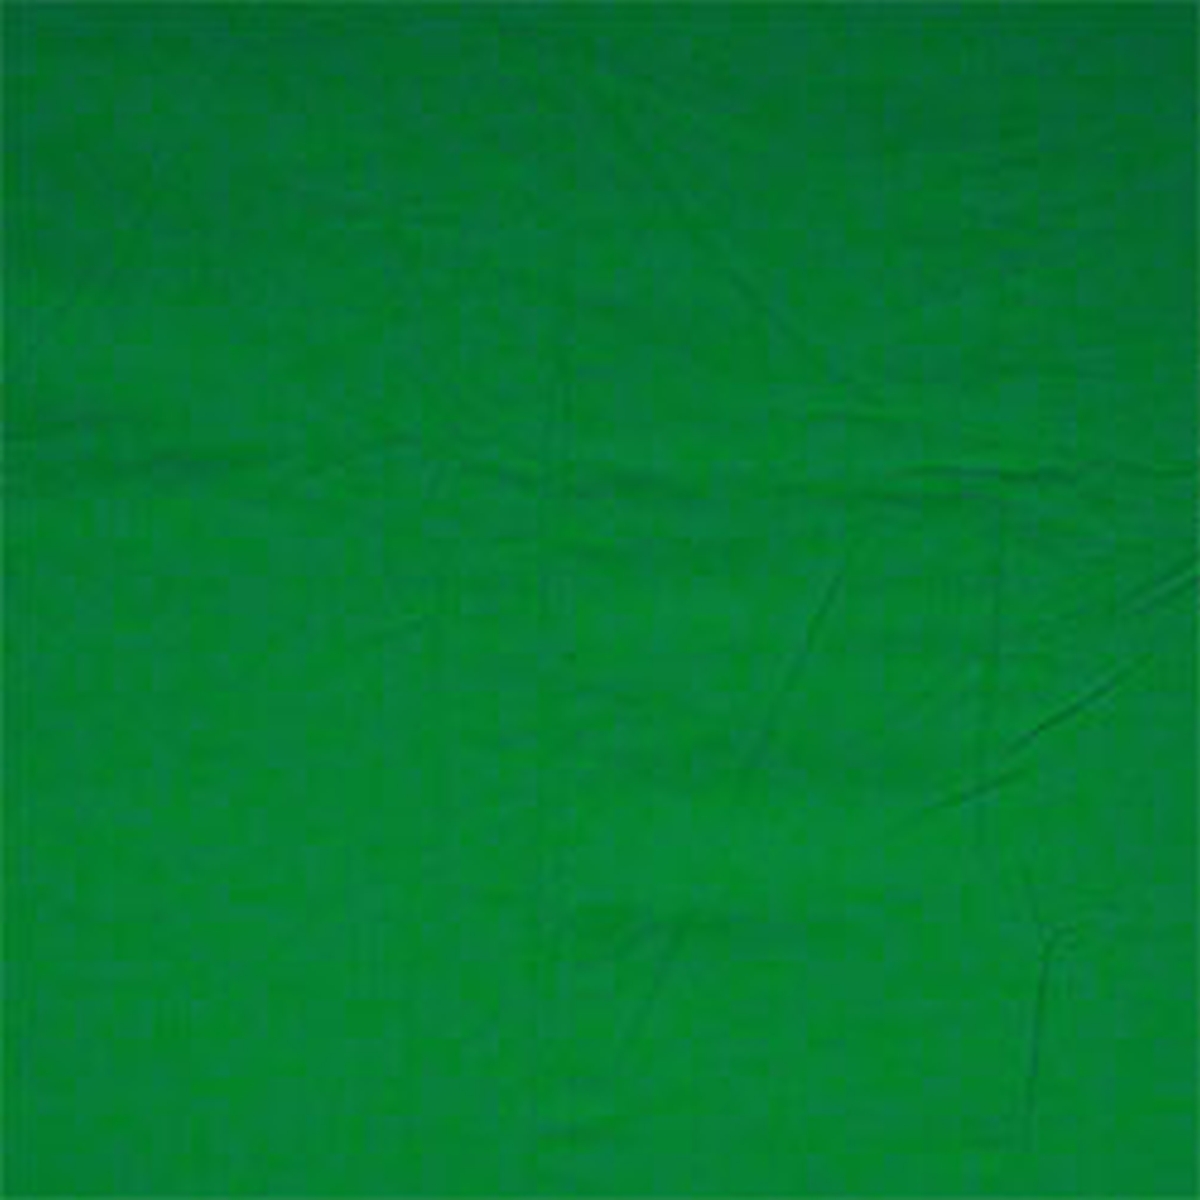 Walimex pro Stoffhintergrund 2,85 x 6 m chroma key grün